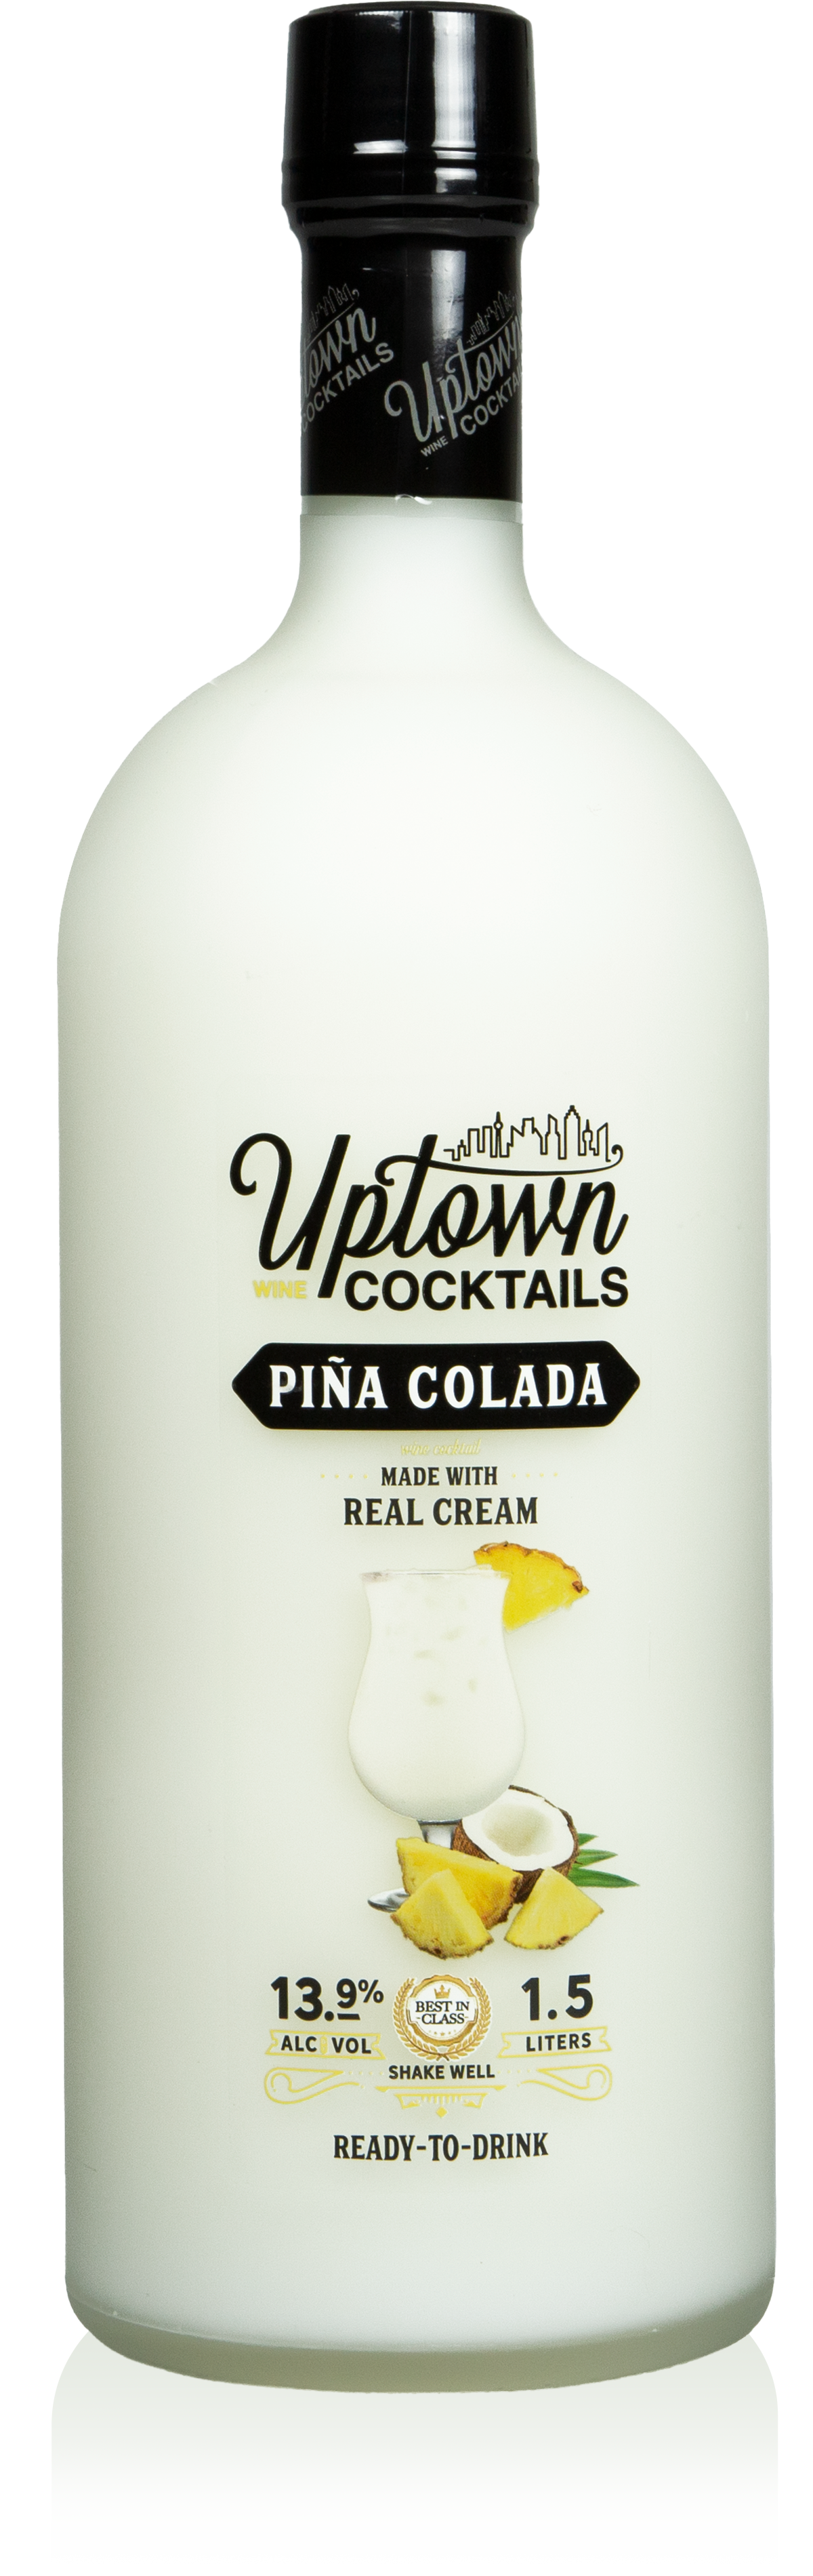 Product Image for Piña Colada